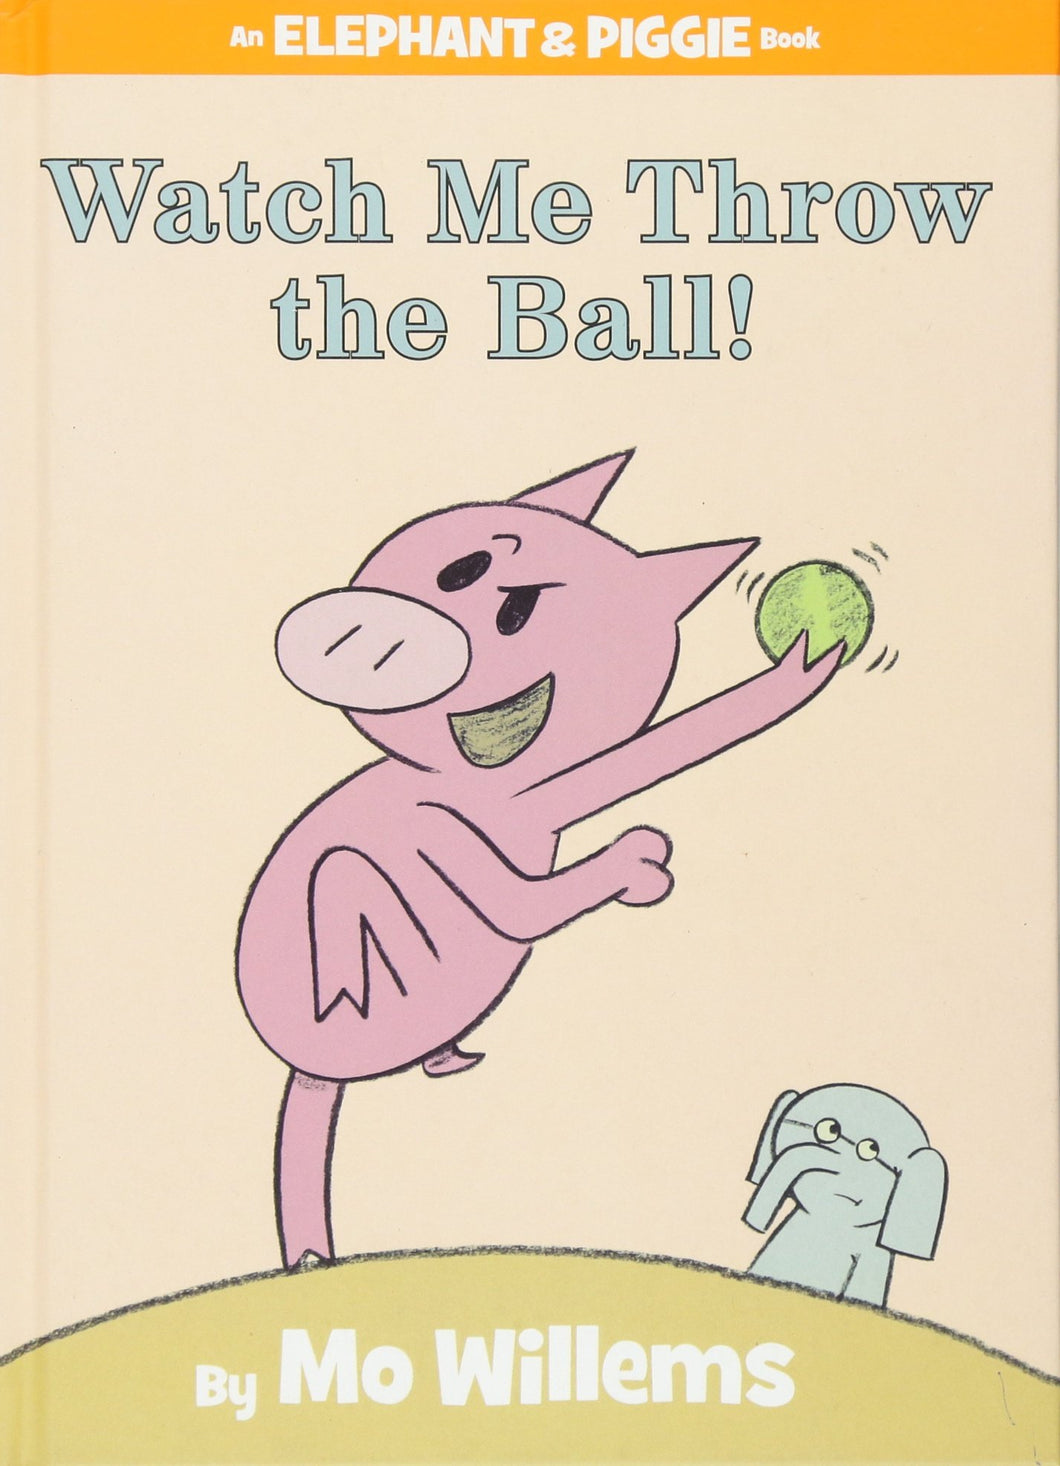 watch me throw the ball Mo willems esikidz marketplace children books preschool books 